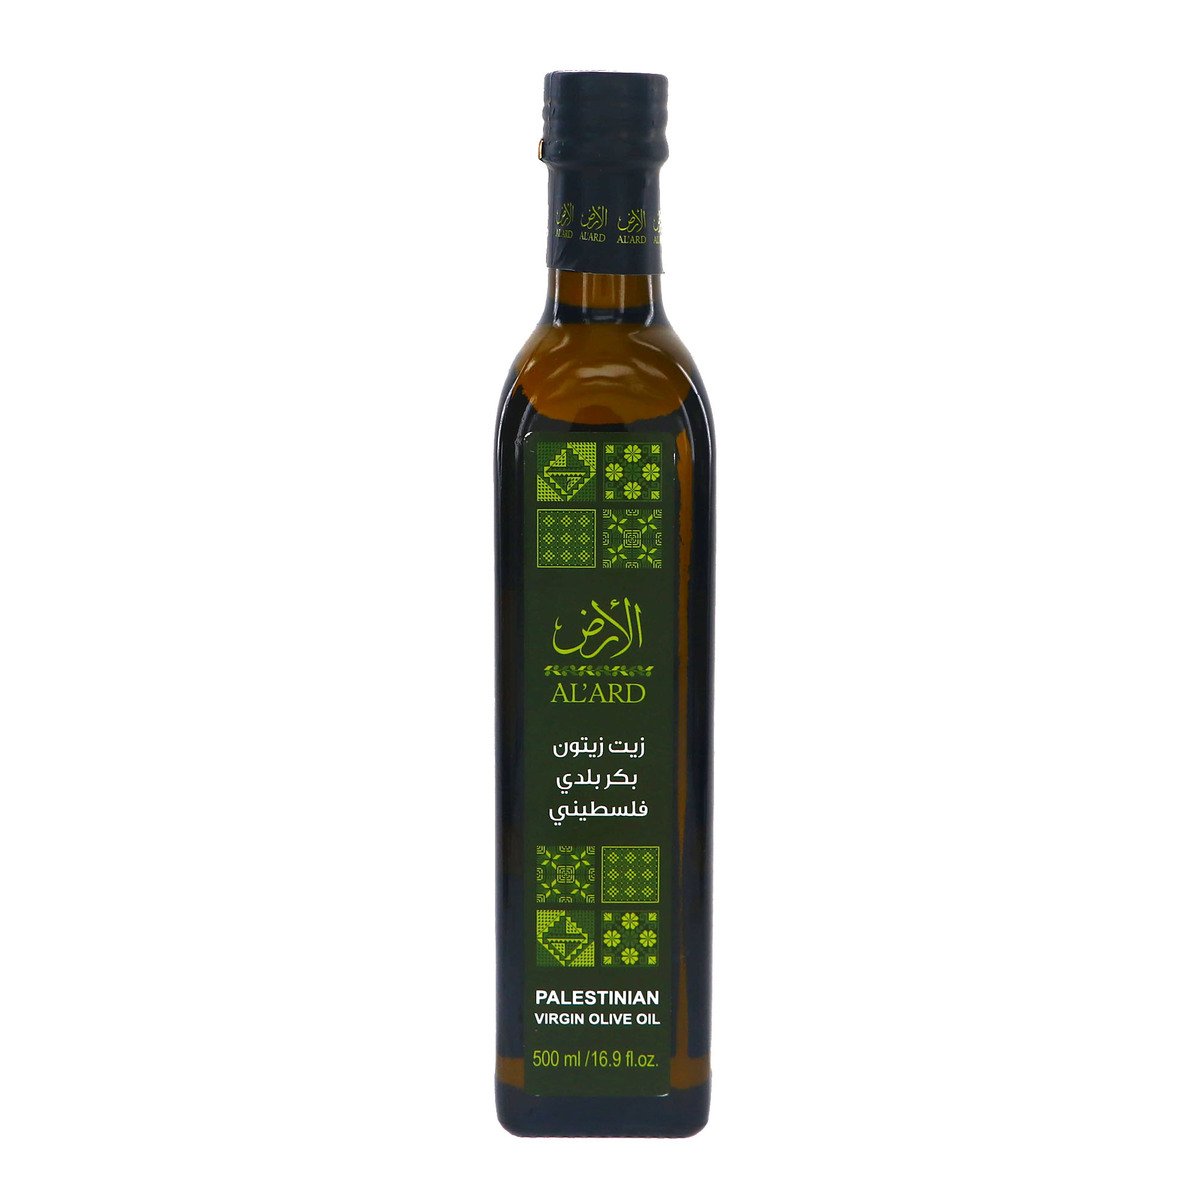 Al Ard Palestian Virgin Olive Oil 500ml